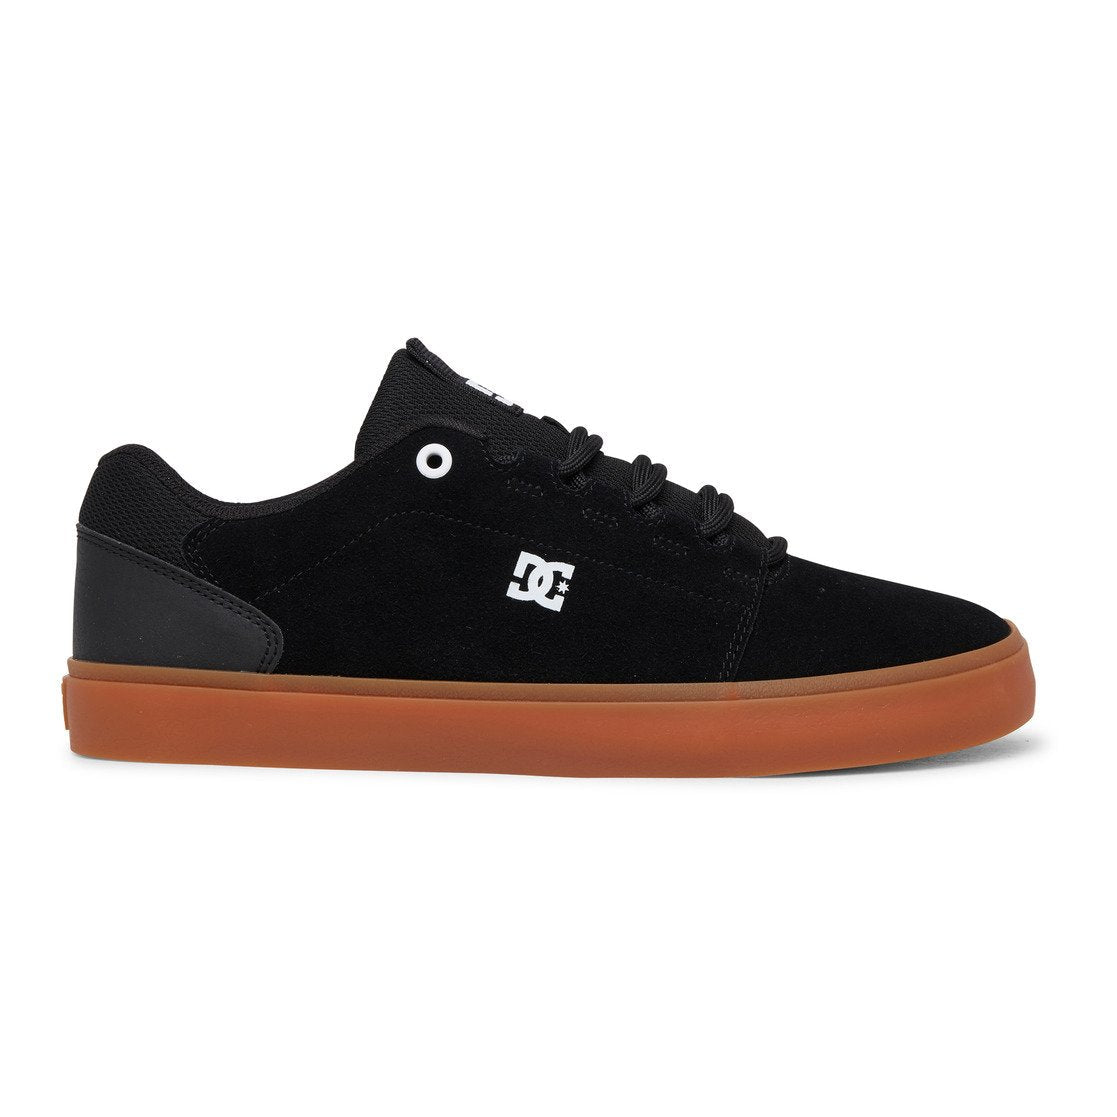 Dc Shoes Hyde Black/Gum | surfdevils.com